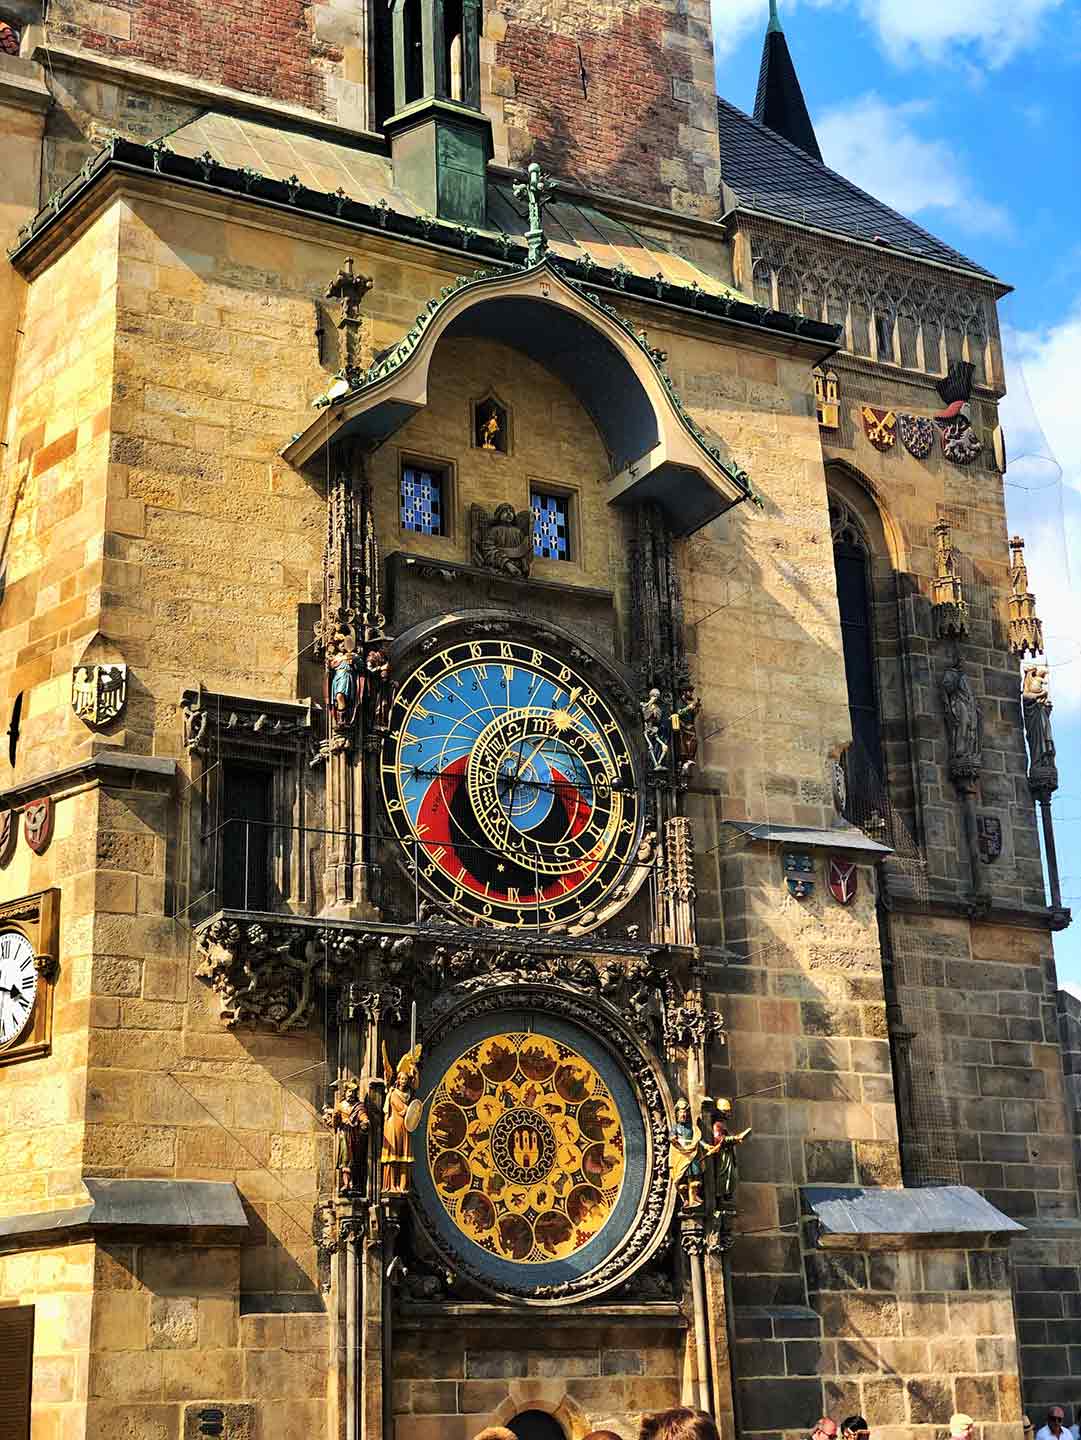 Monumentos que ver en Praga - Reloj Astronómico